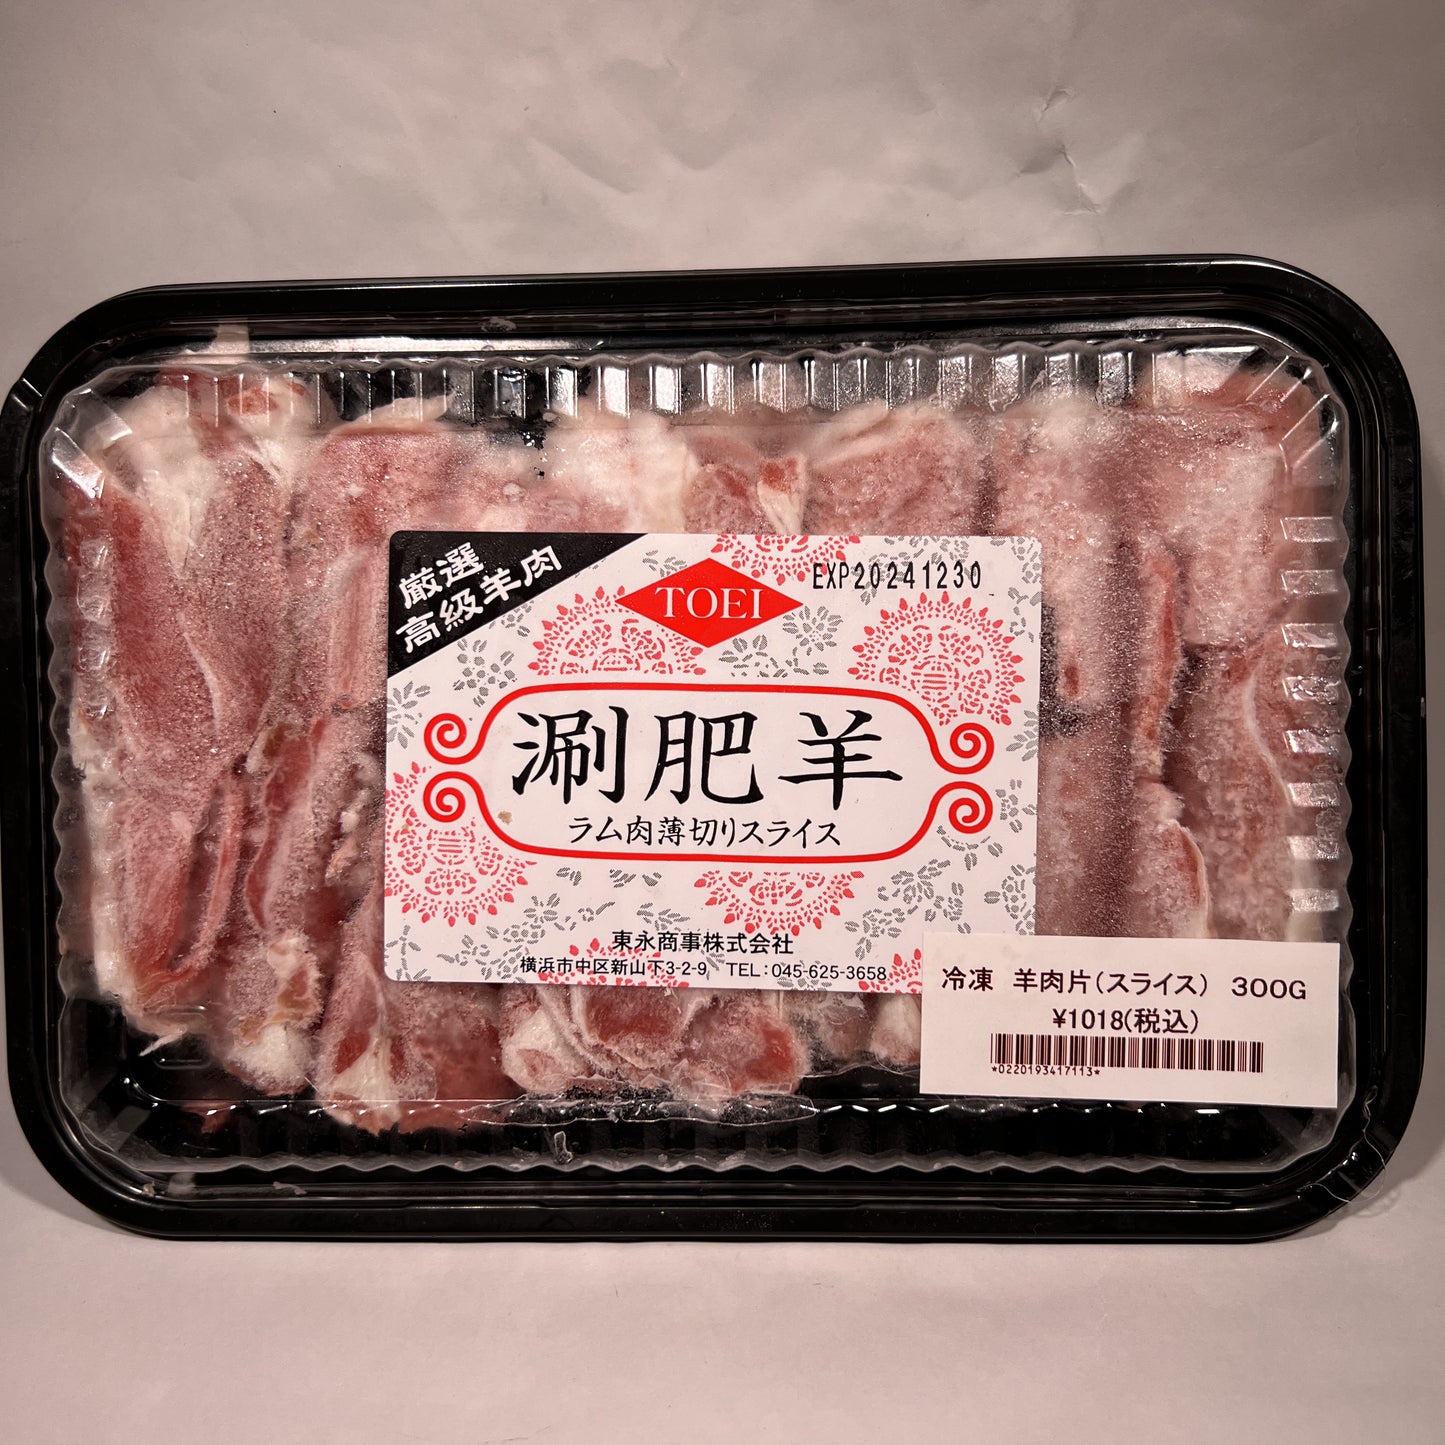 Frozen 羊肉片（スライス）ニュージーランド産 300g Sliced Lamb